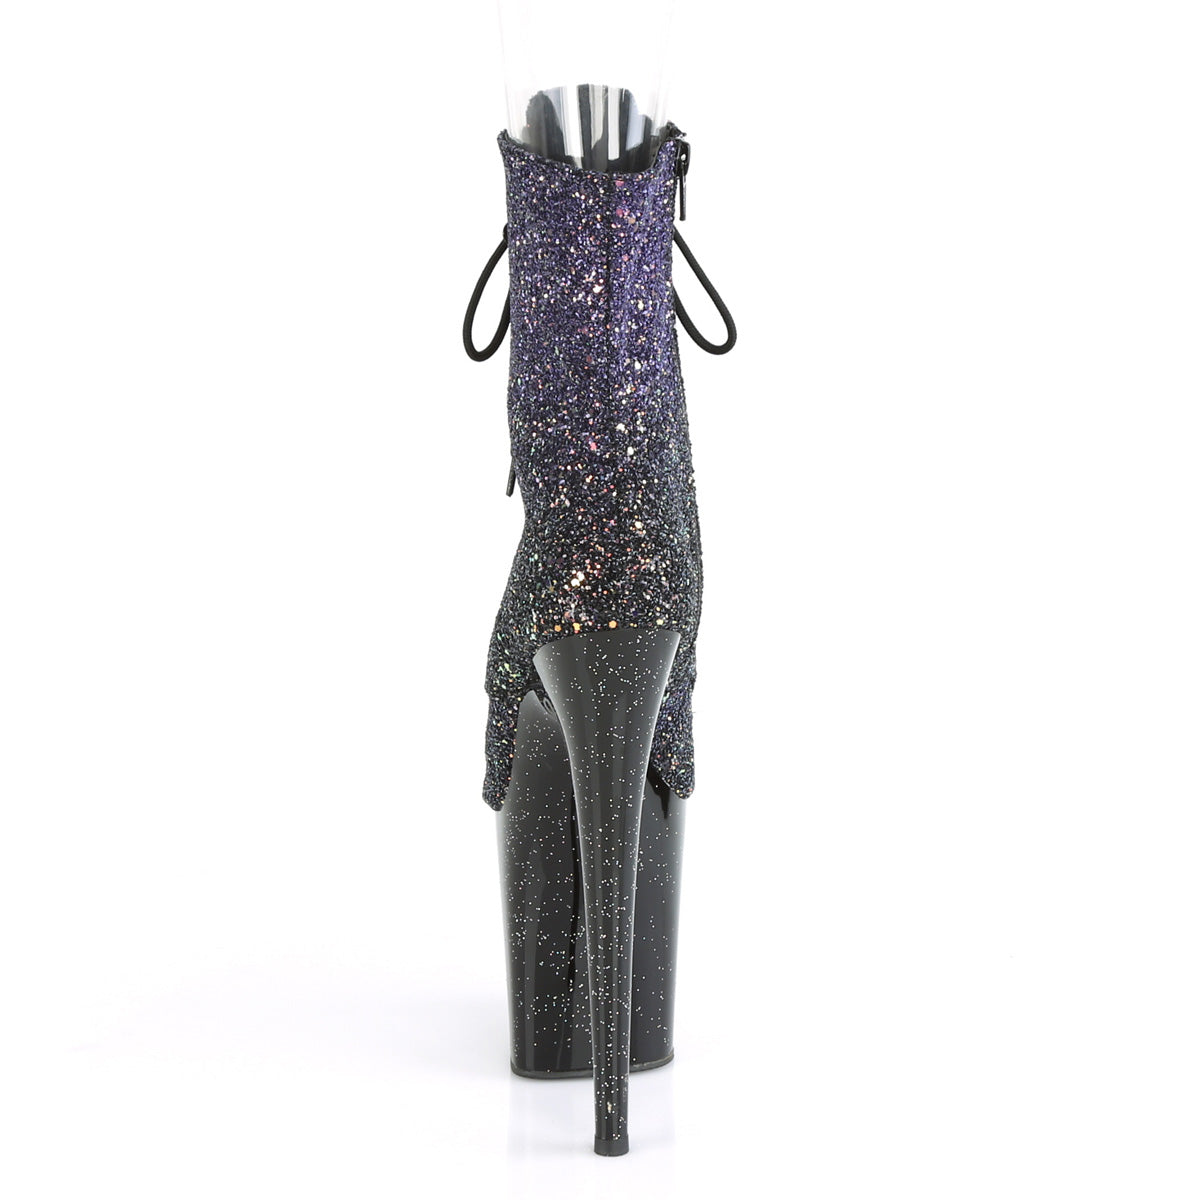 FLAMINGO-1021OMBG Purple Multi Glitter/Black Ankle Boot Pleaser